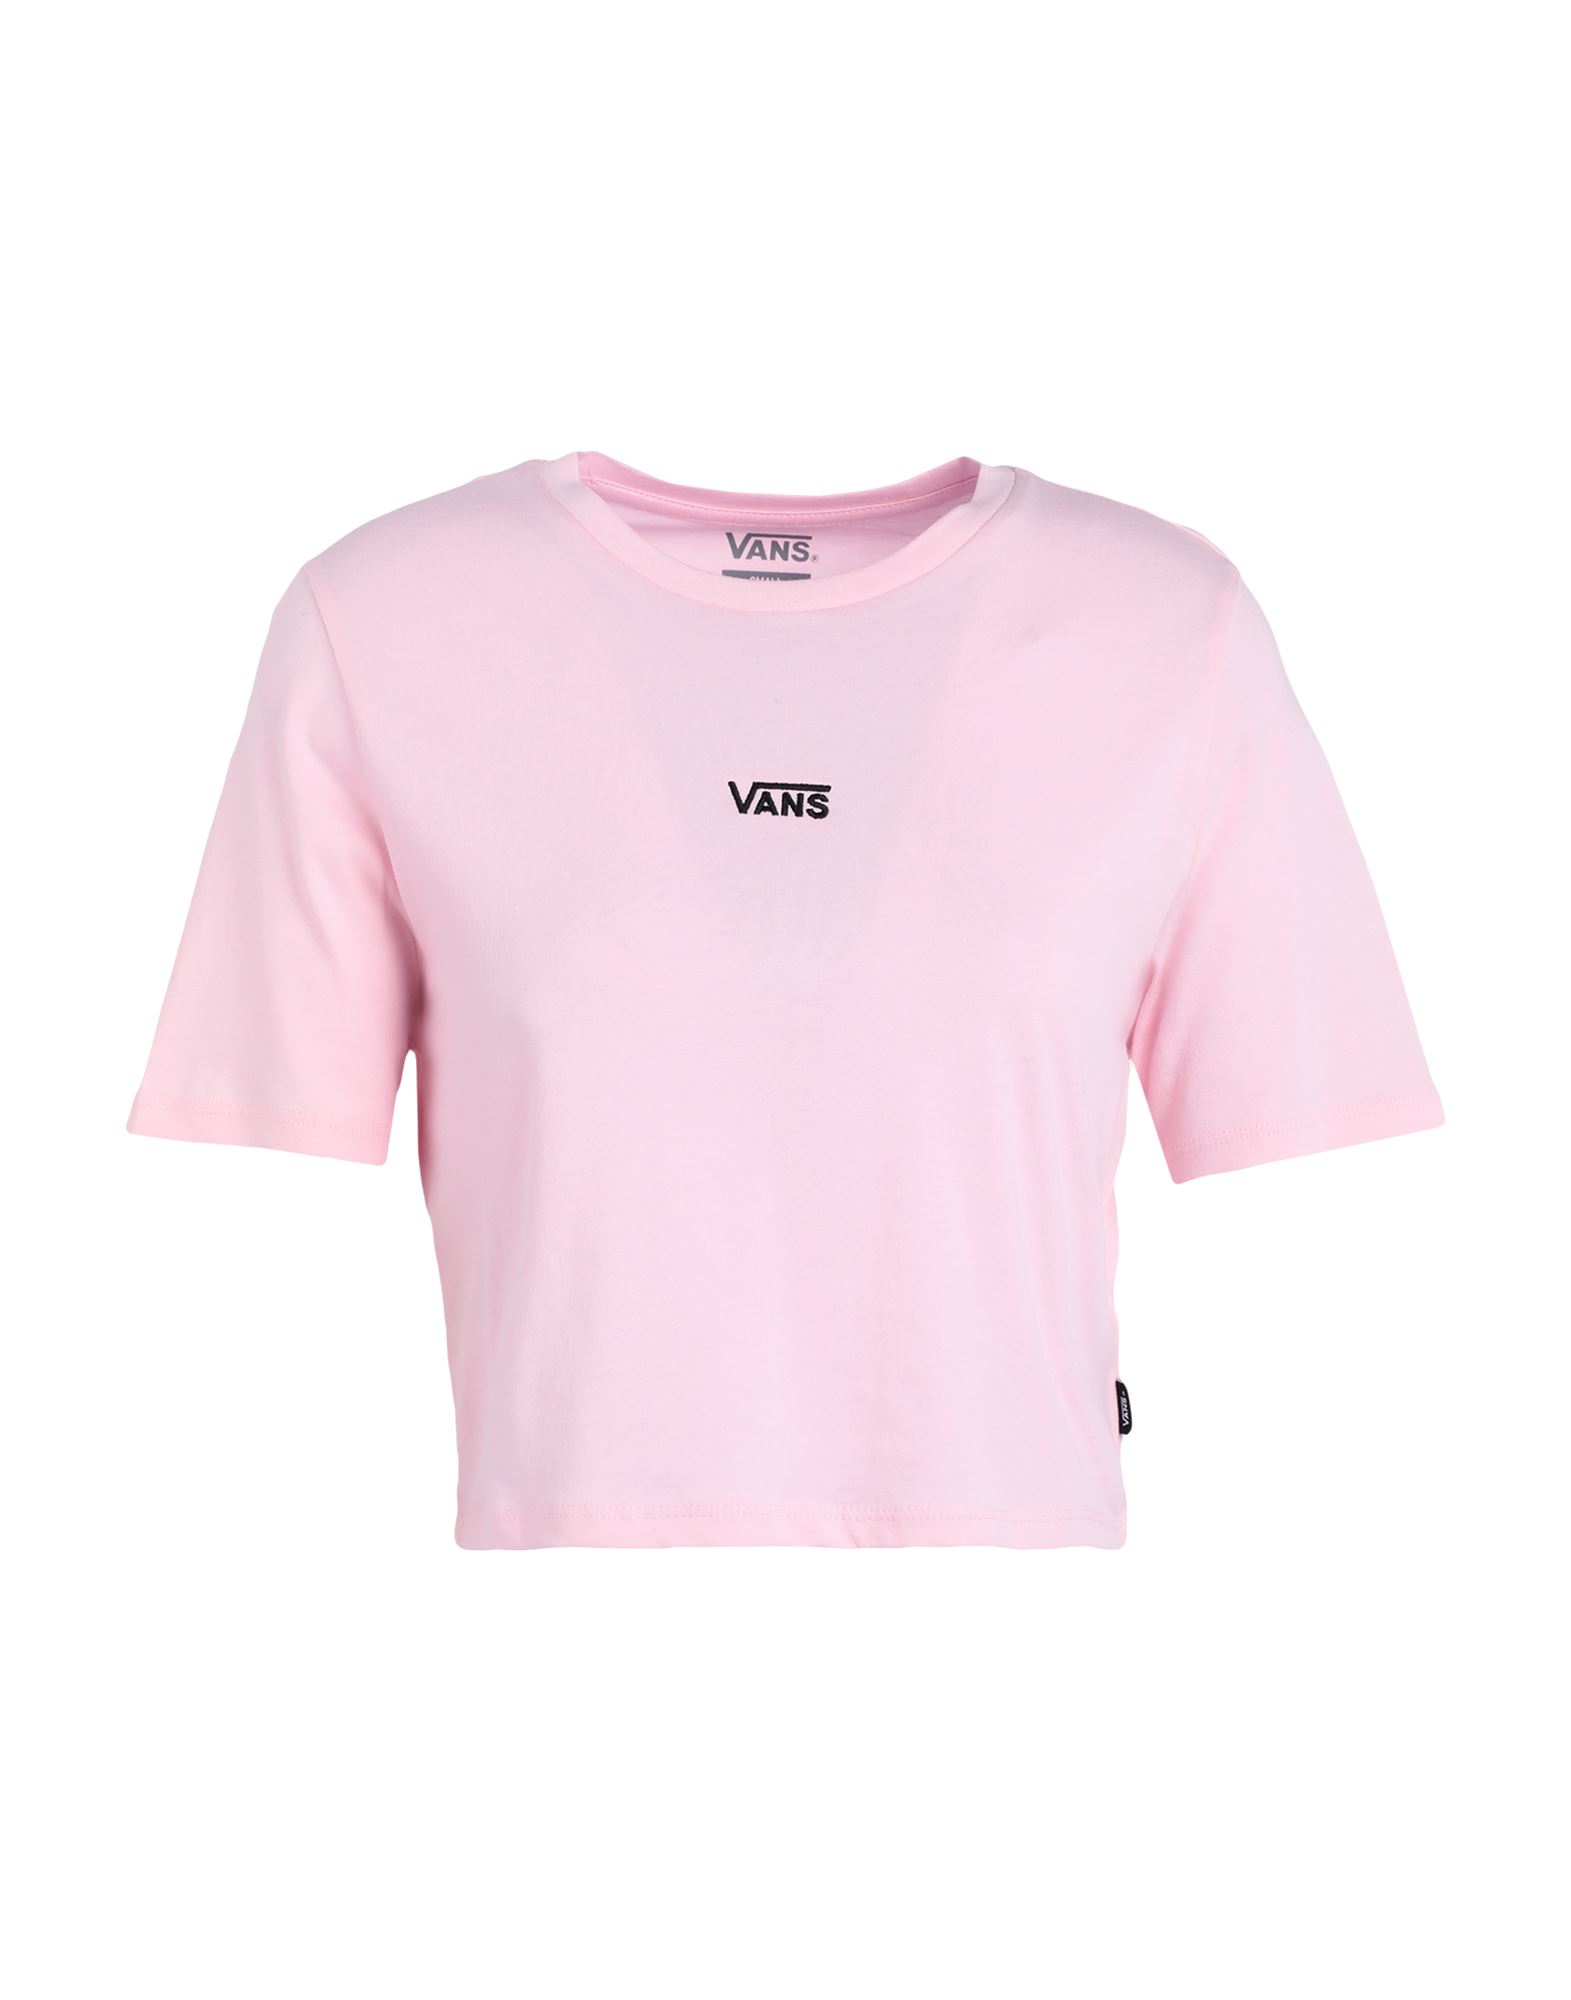 VANS T-shirts Damen Rosa von VANS